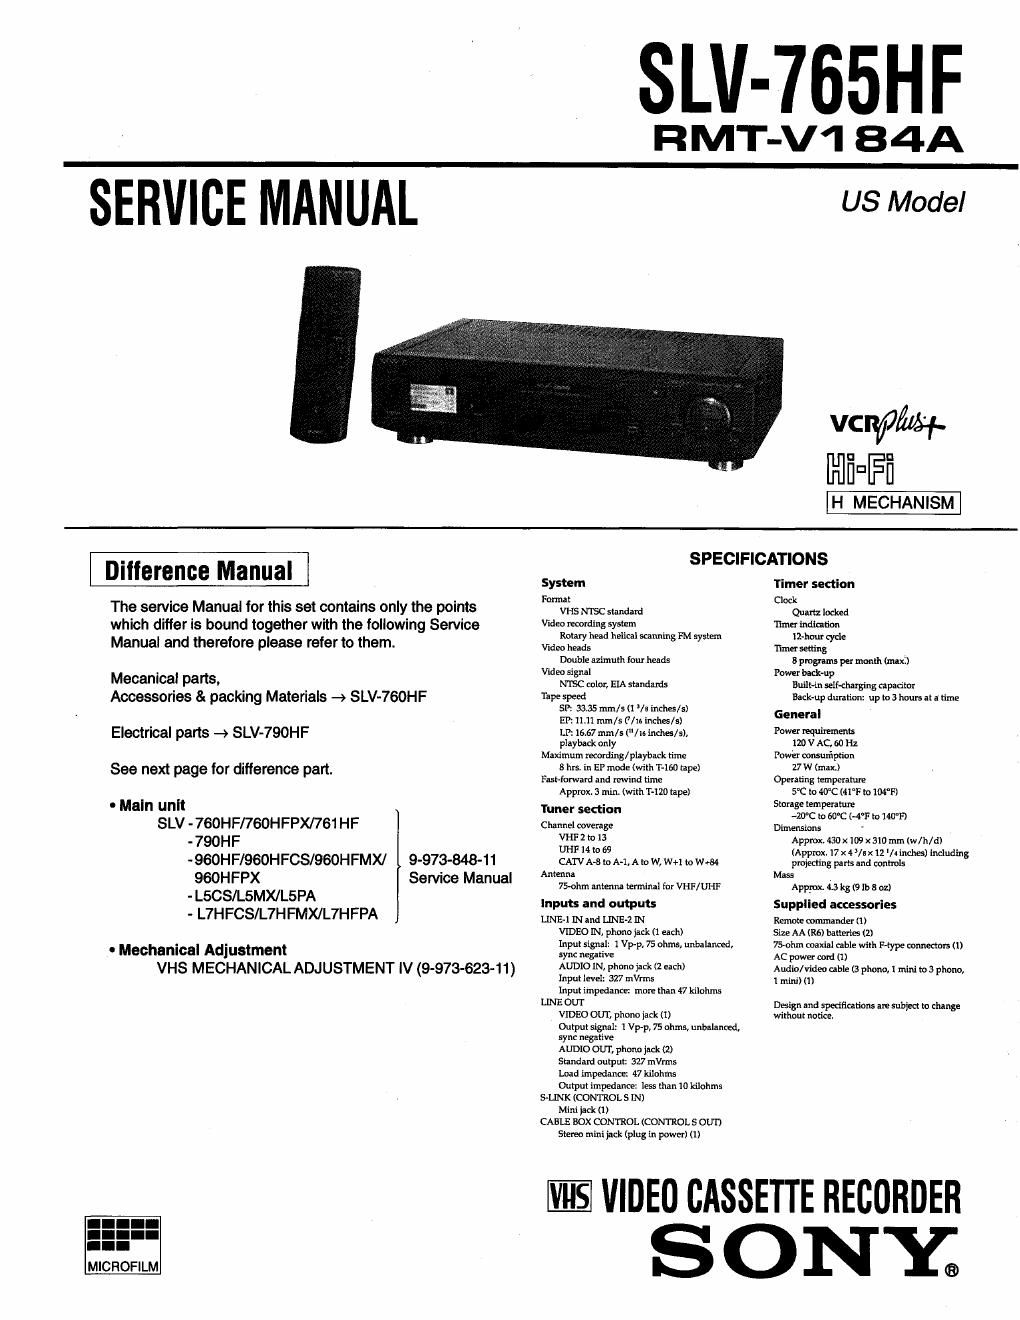 sony slv 765 hf service manual